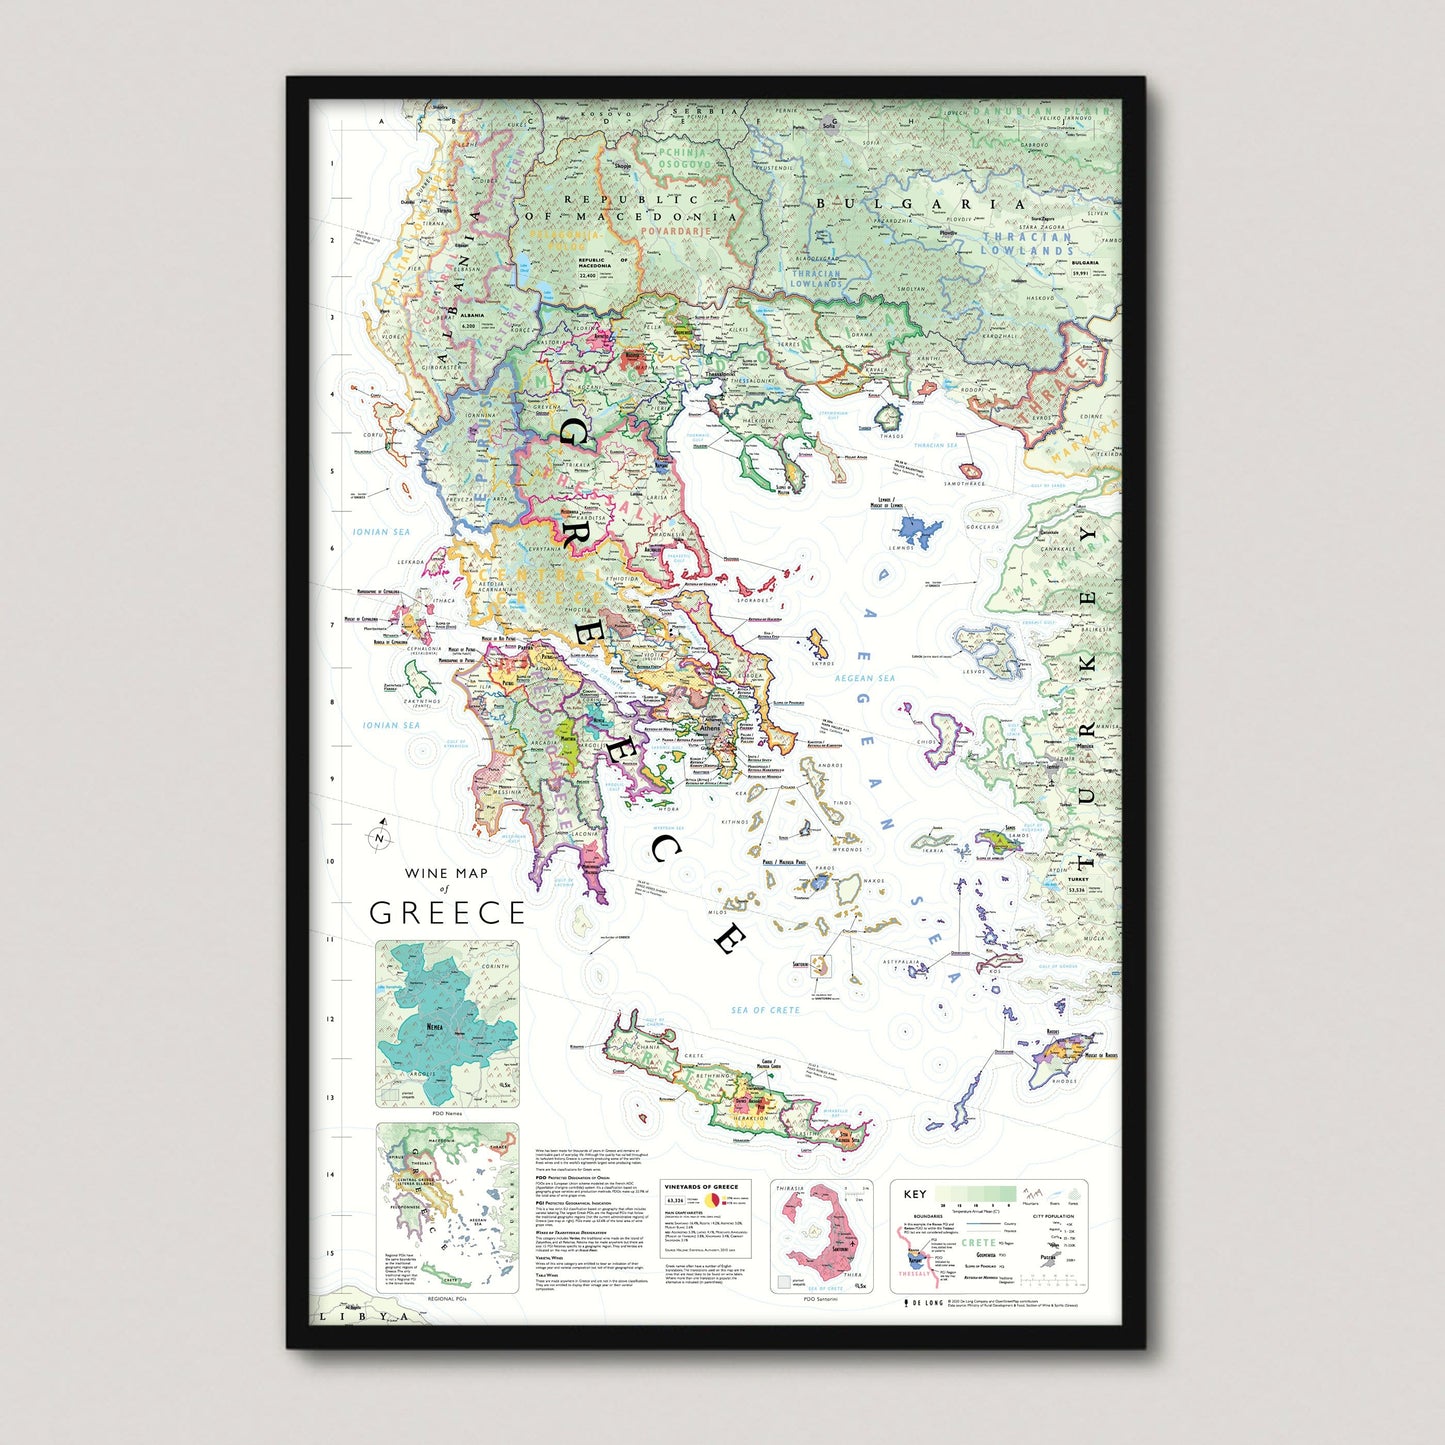 Wine Map of Greece framed